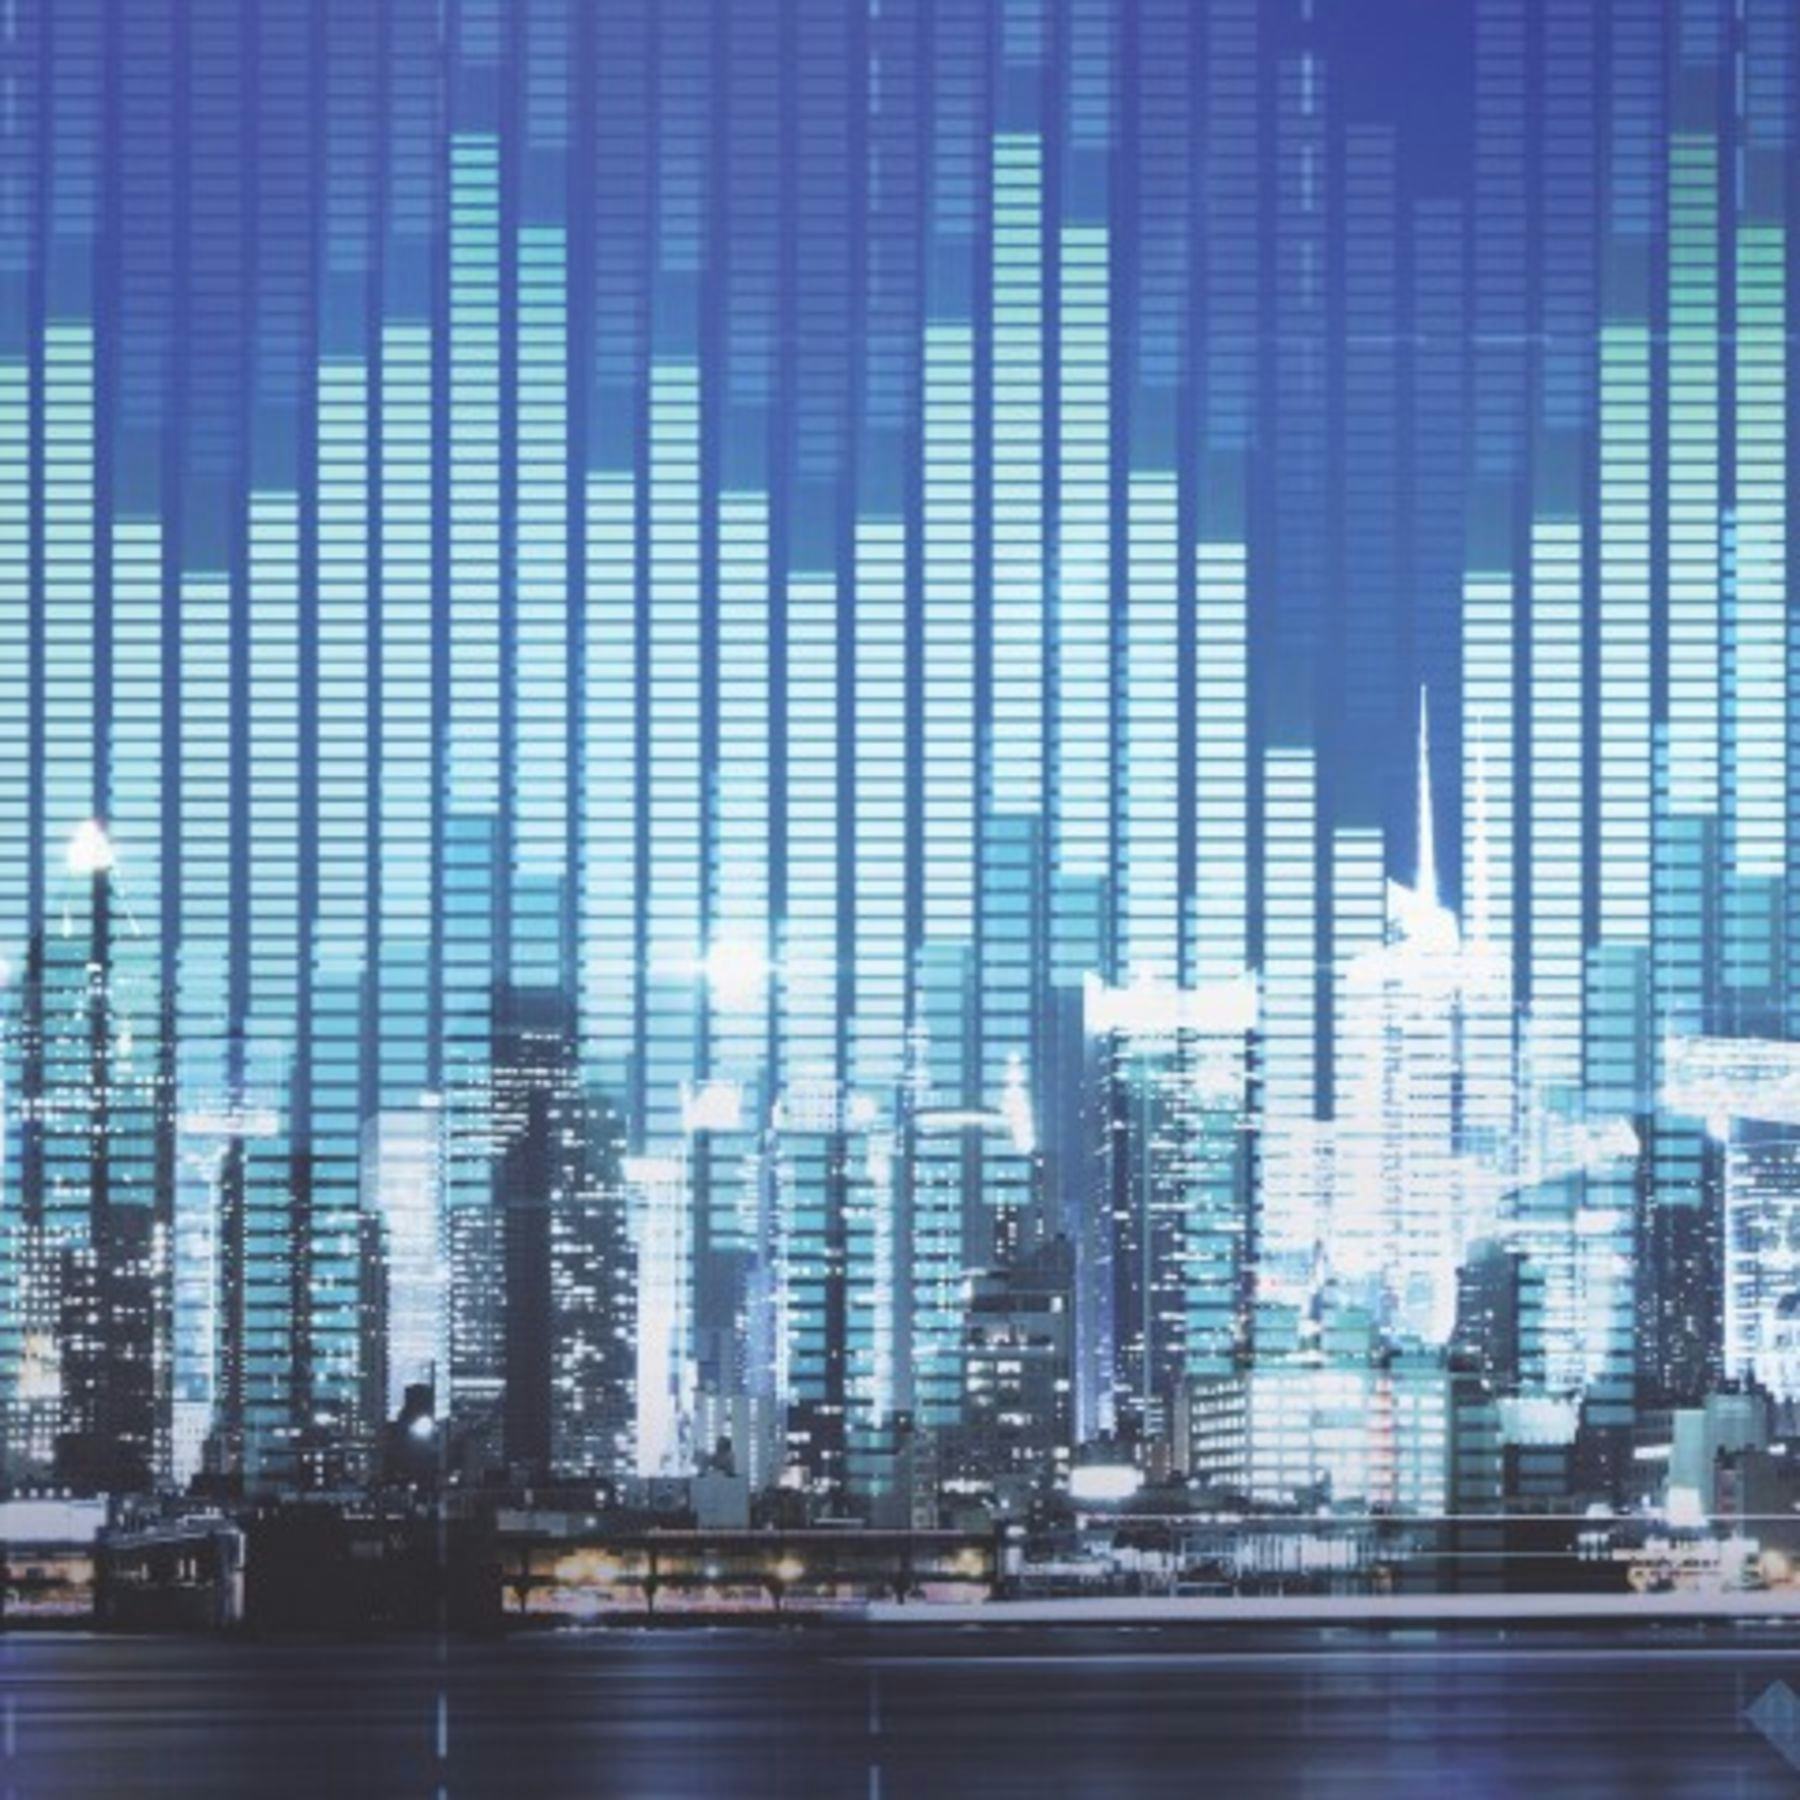 Graphs superimposed on city skyline